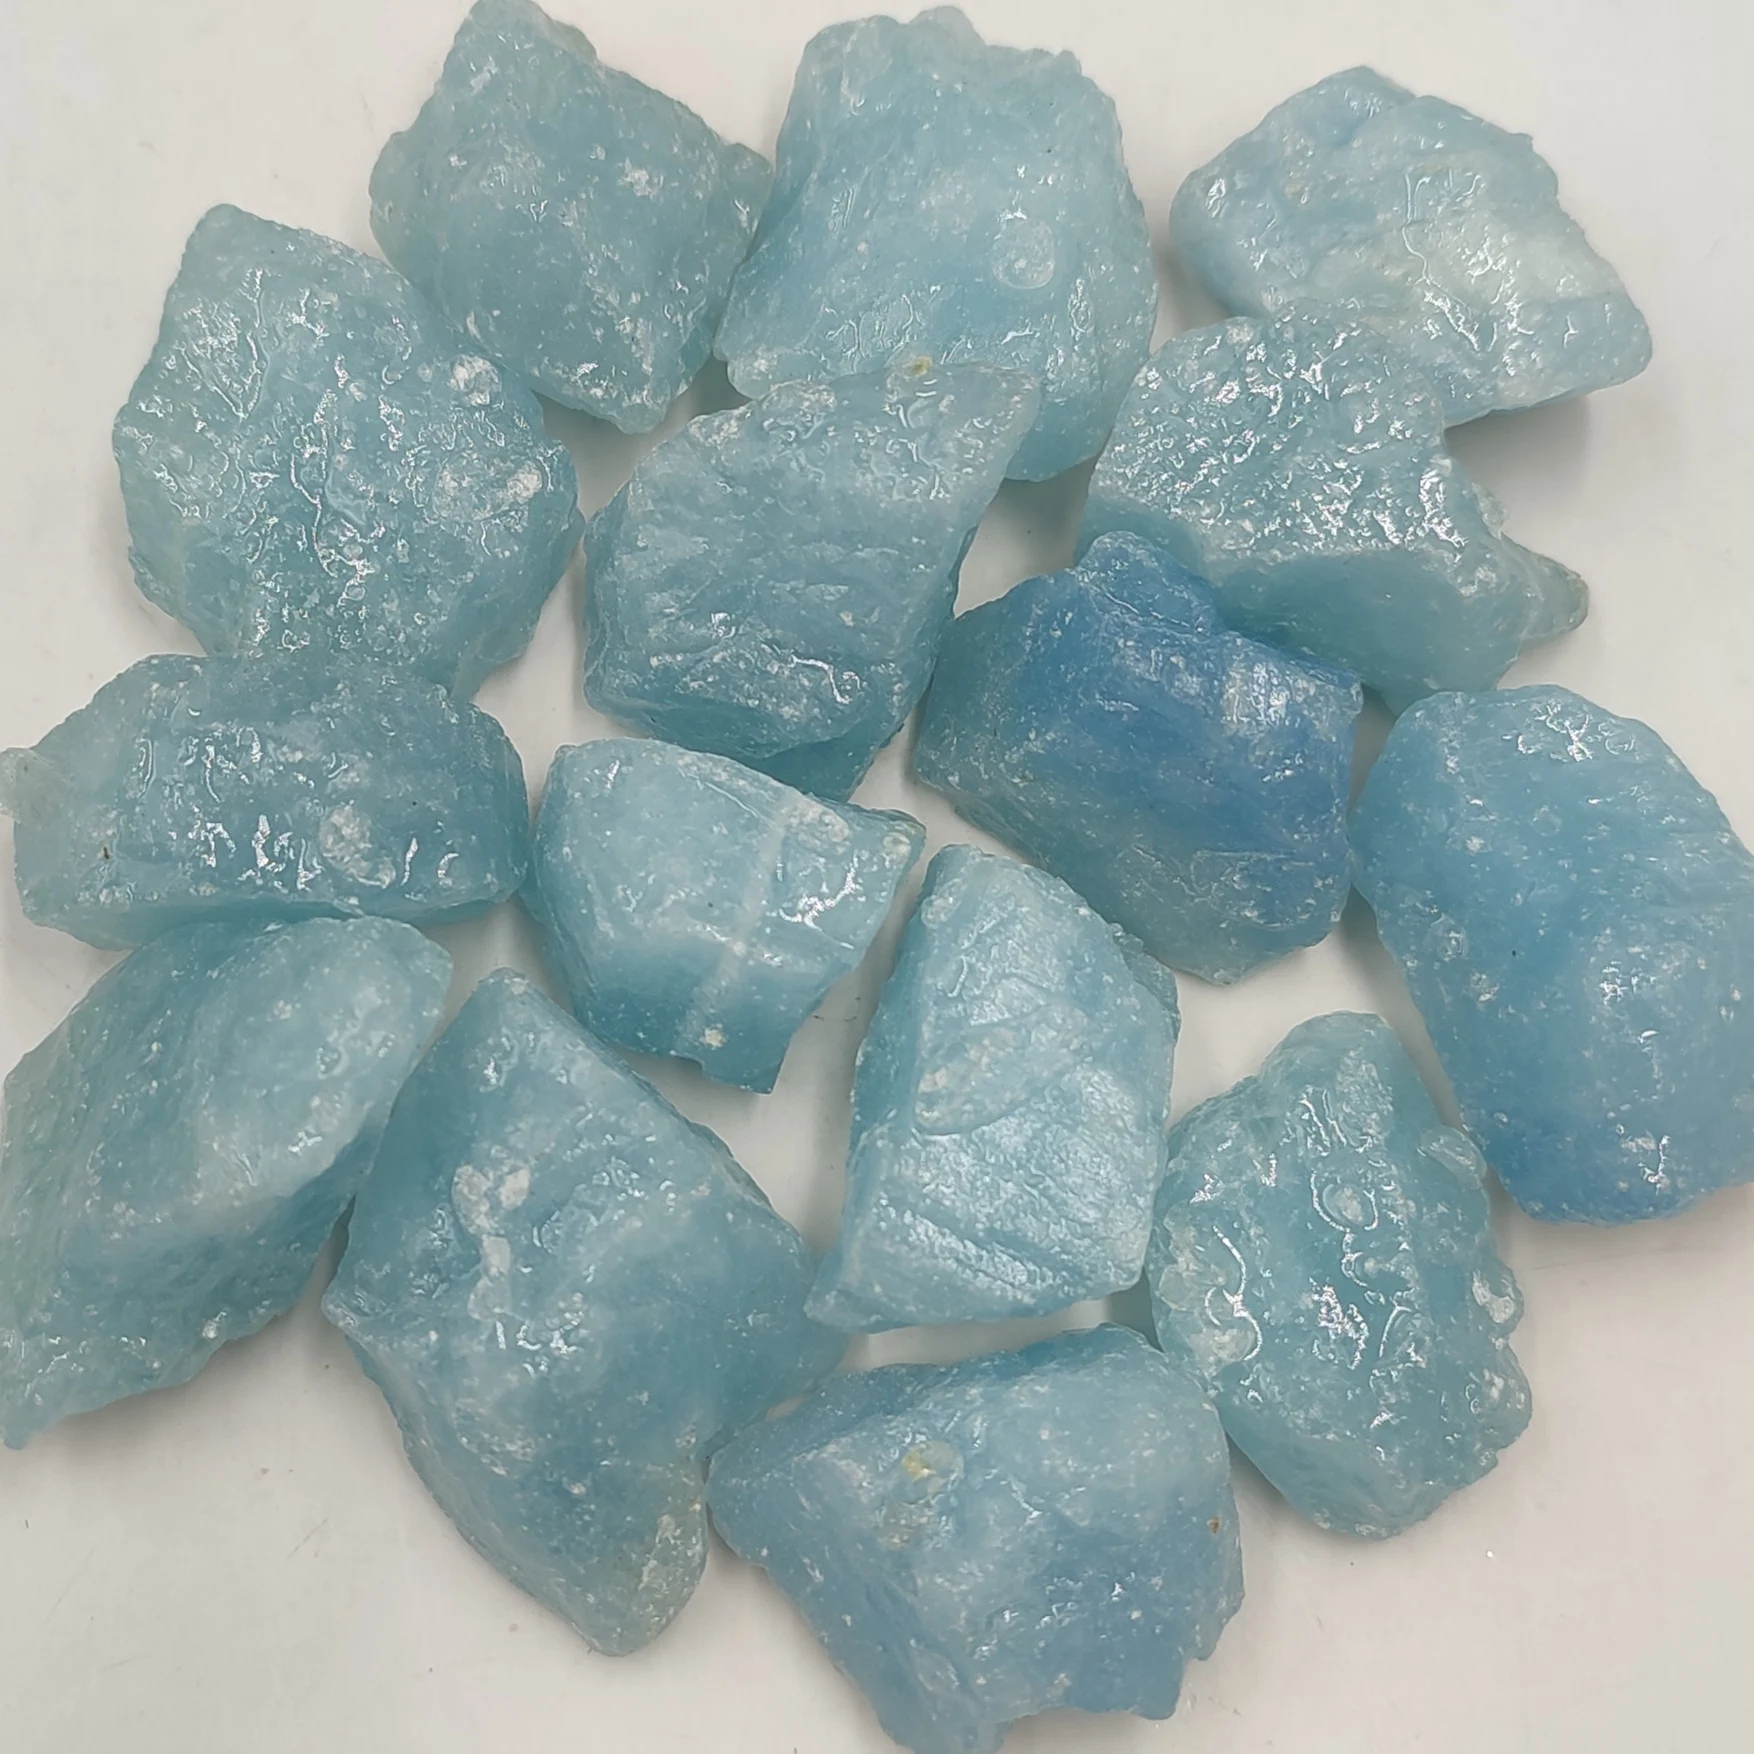 

100g Bulk Natural Aquamarine Stone Crystal Quartz Rock Collectible Mineral Specimen Healing Raw Rough Gemstone Aquarium Decor